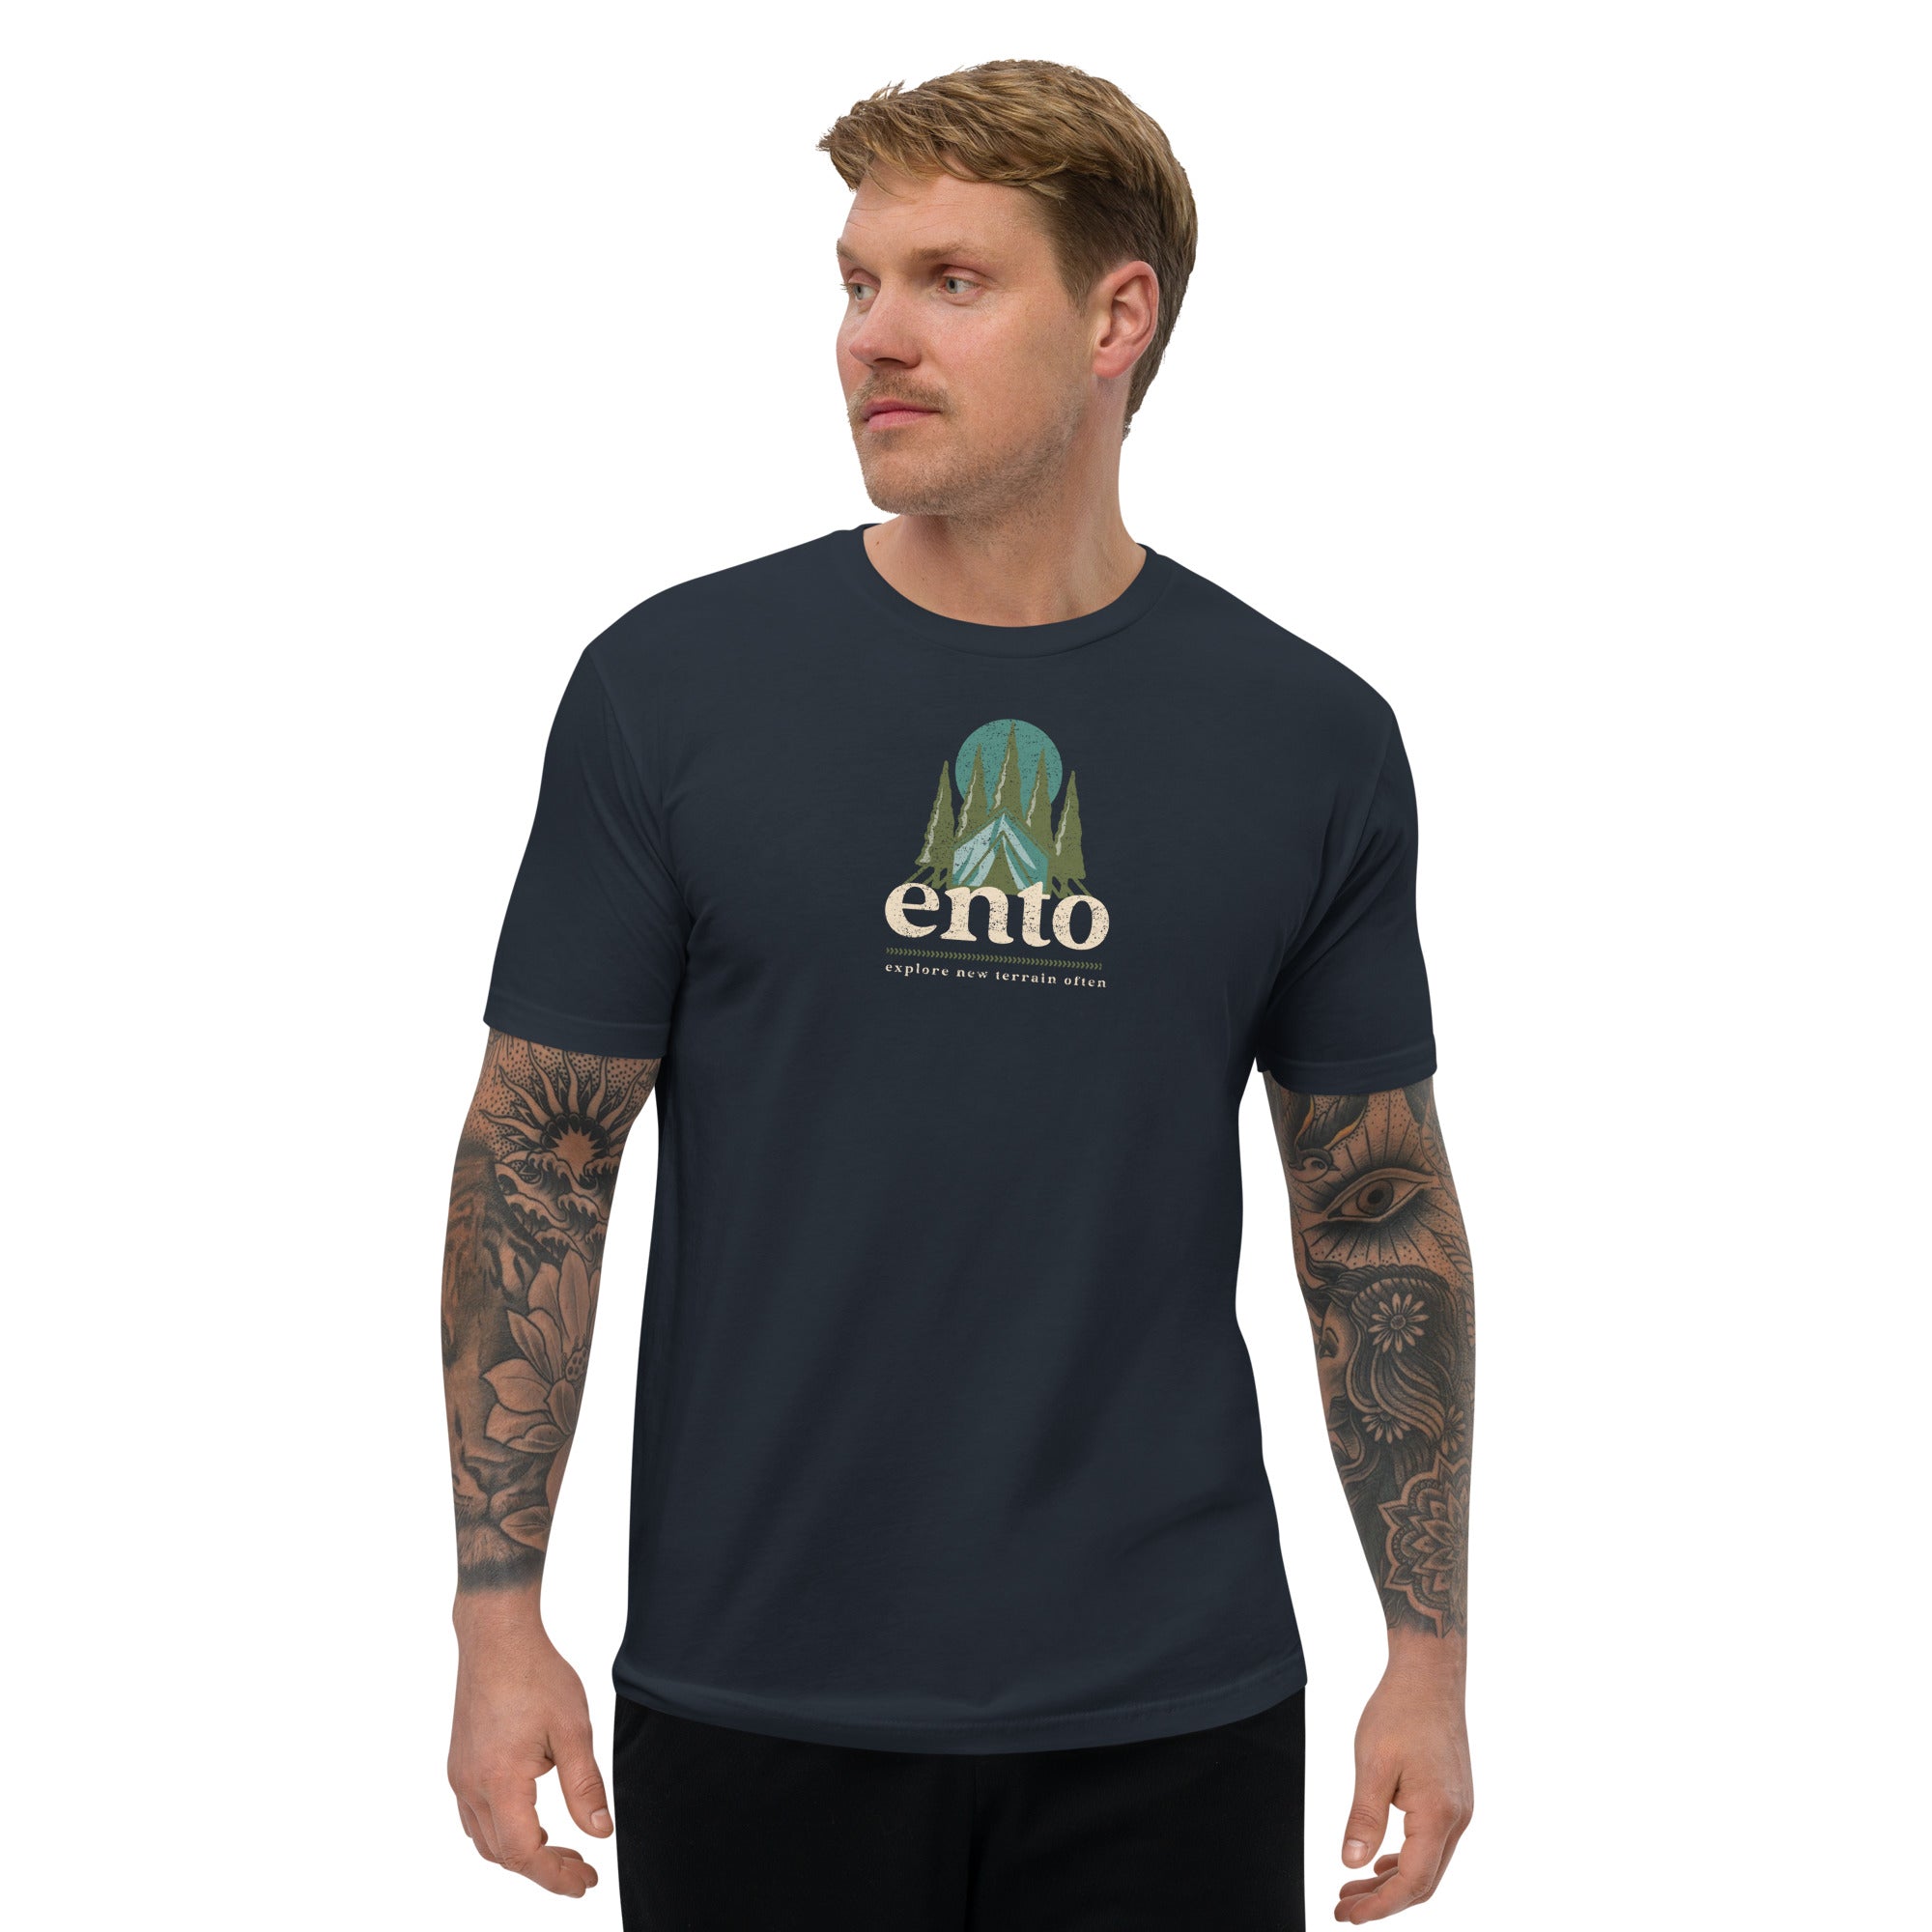 Men's Full Moon Athletic Short Sleeve T-shirt